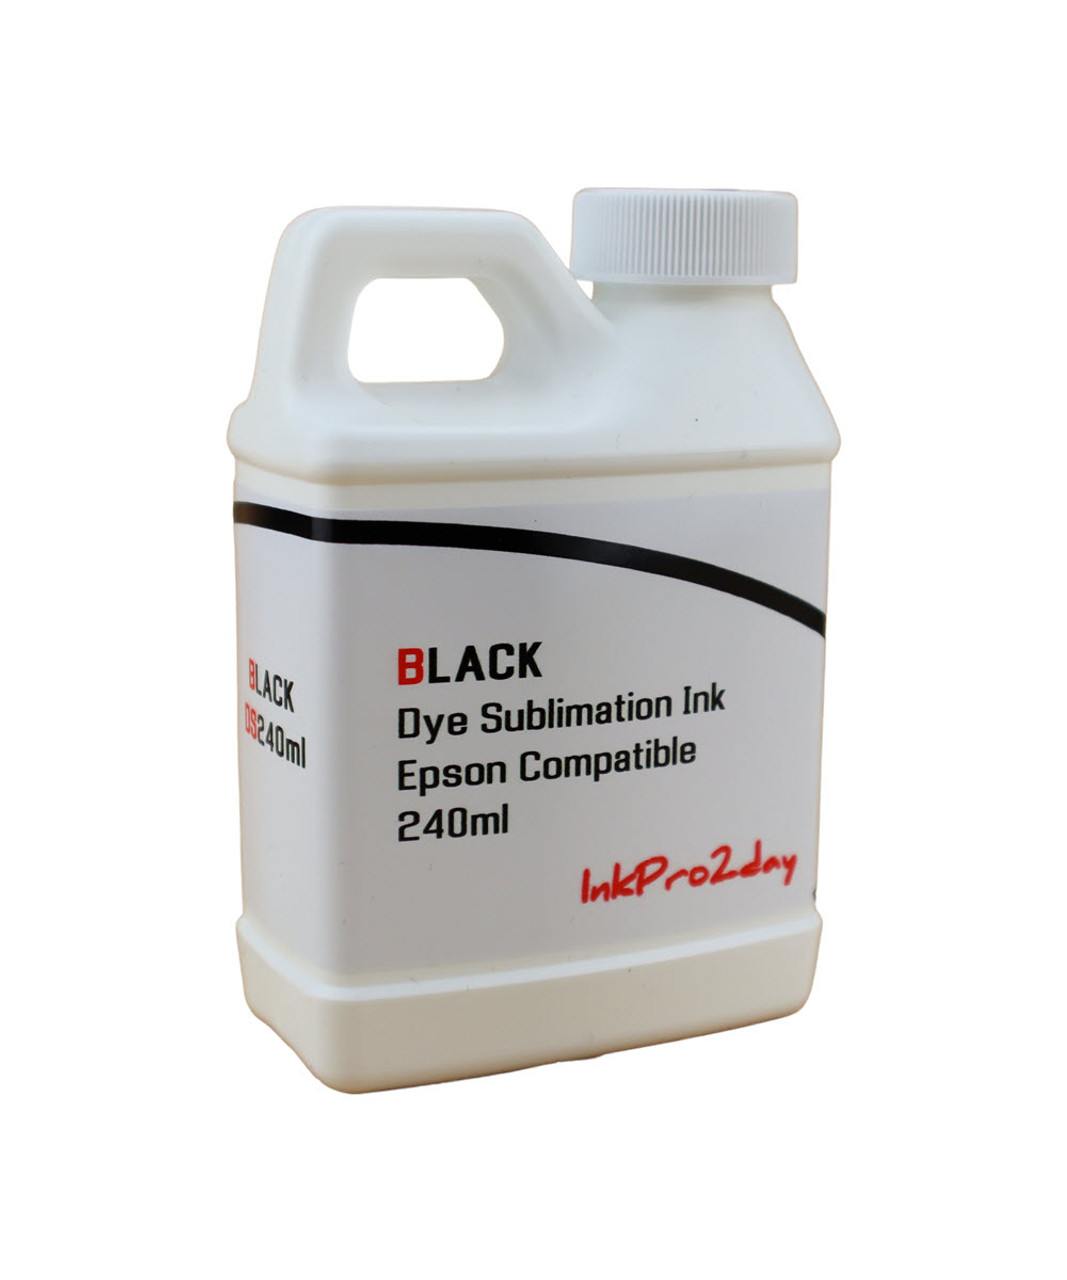 Black Dye Sublimation Ink 240ml Bottle for Epson WorkForce WF-3620, WorkForce WF-3640, WorkForce WF-7110, WorkForce WF-7610, WorkForce WF-7620 Printers